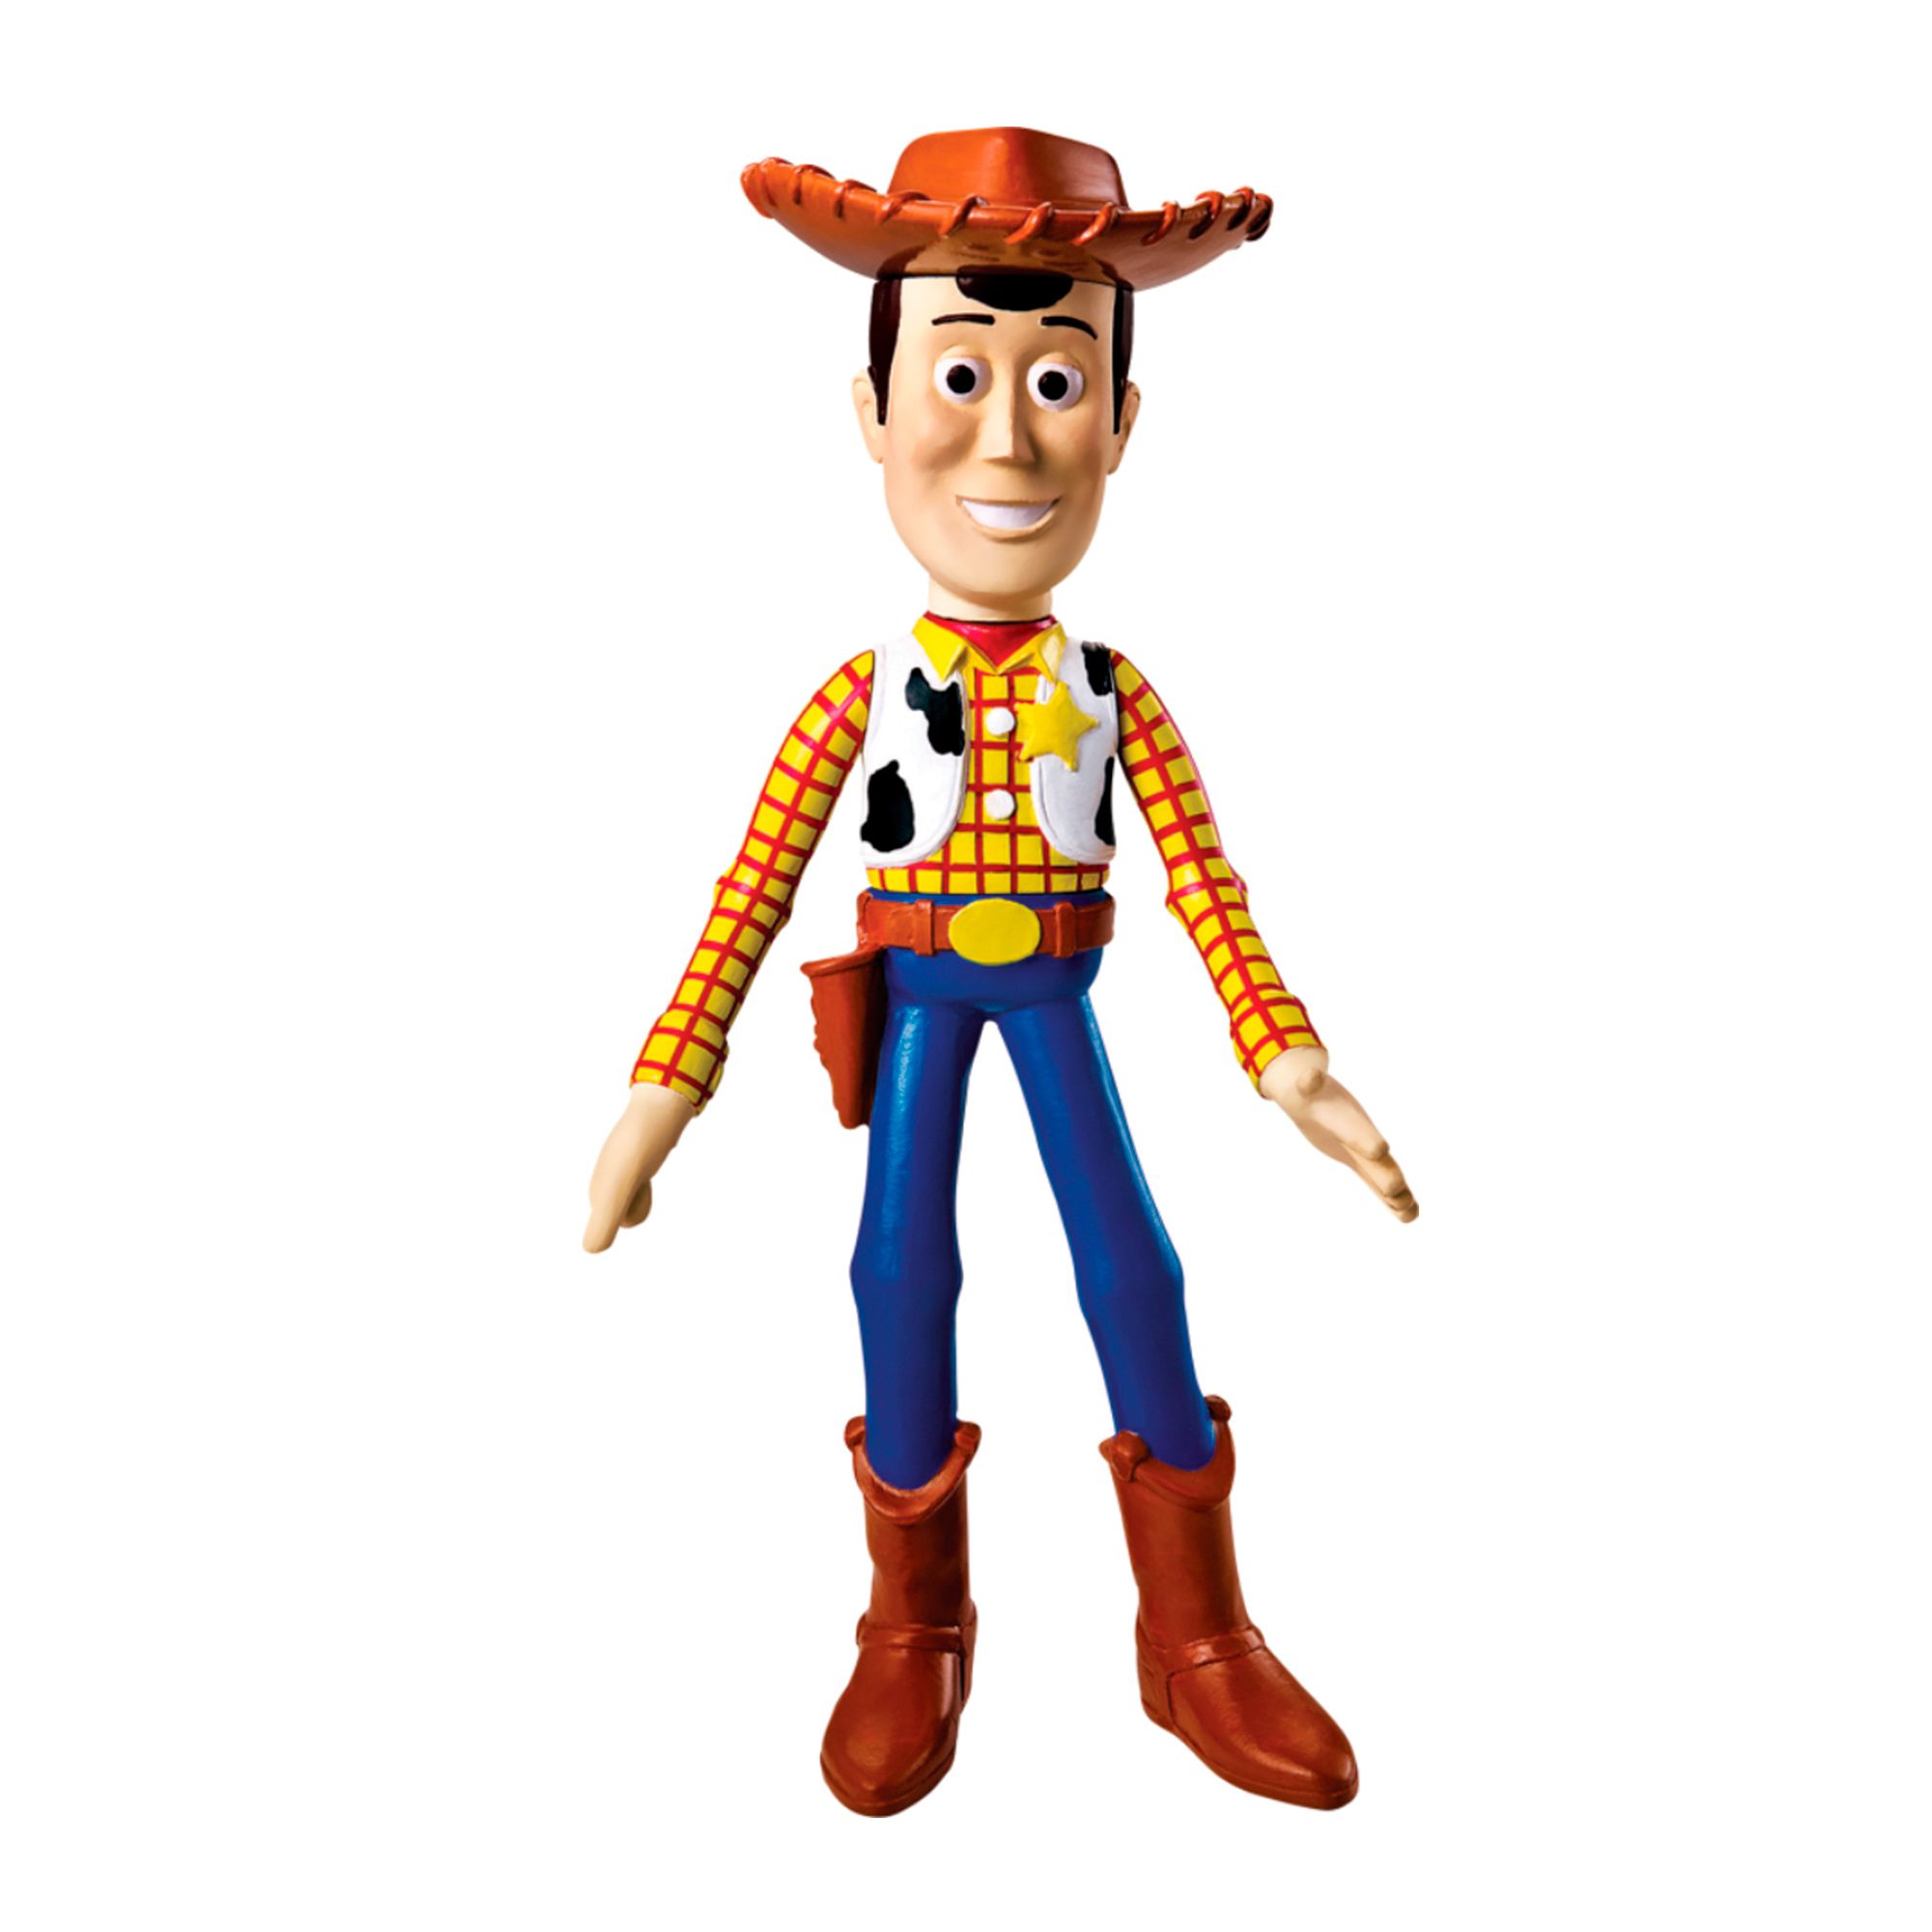 Boneco Wood Toy Story Brinquedo Xerife Vinil Articulado 18cm